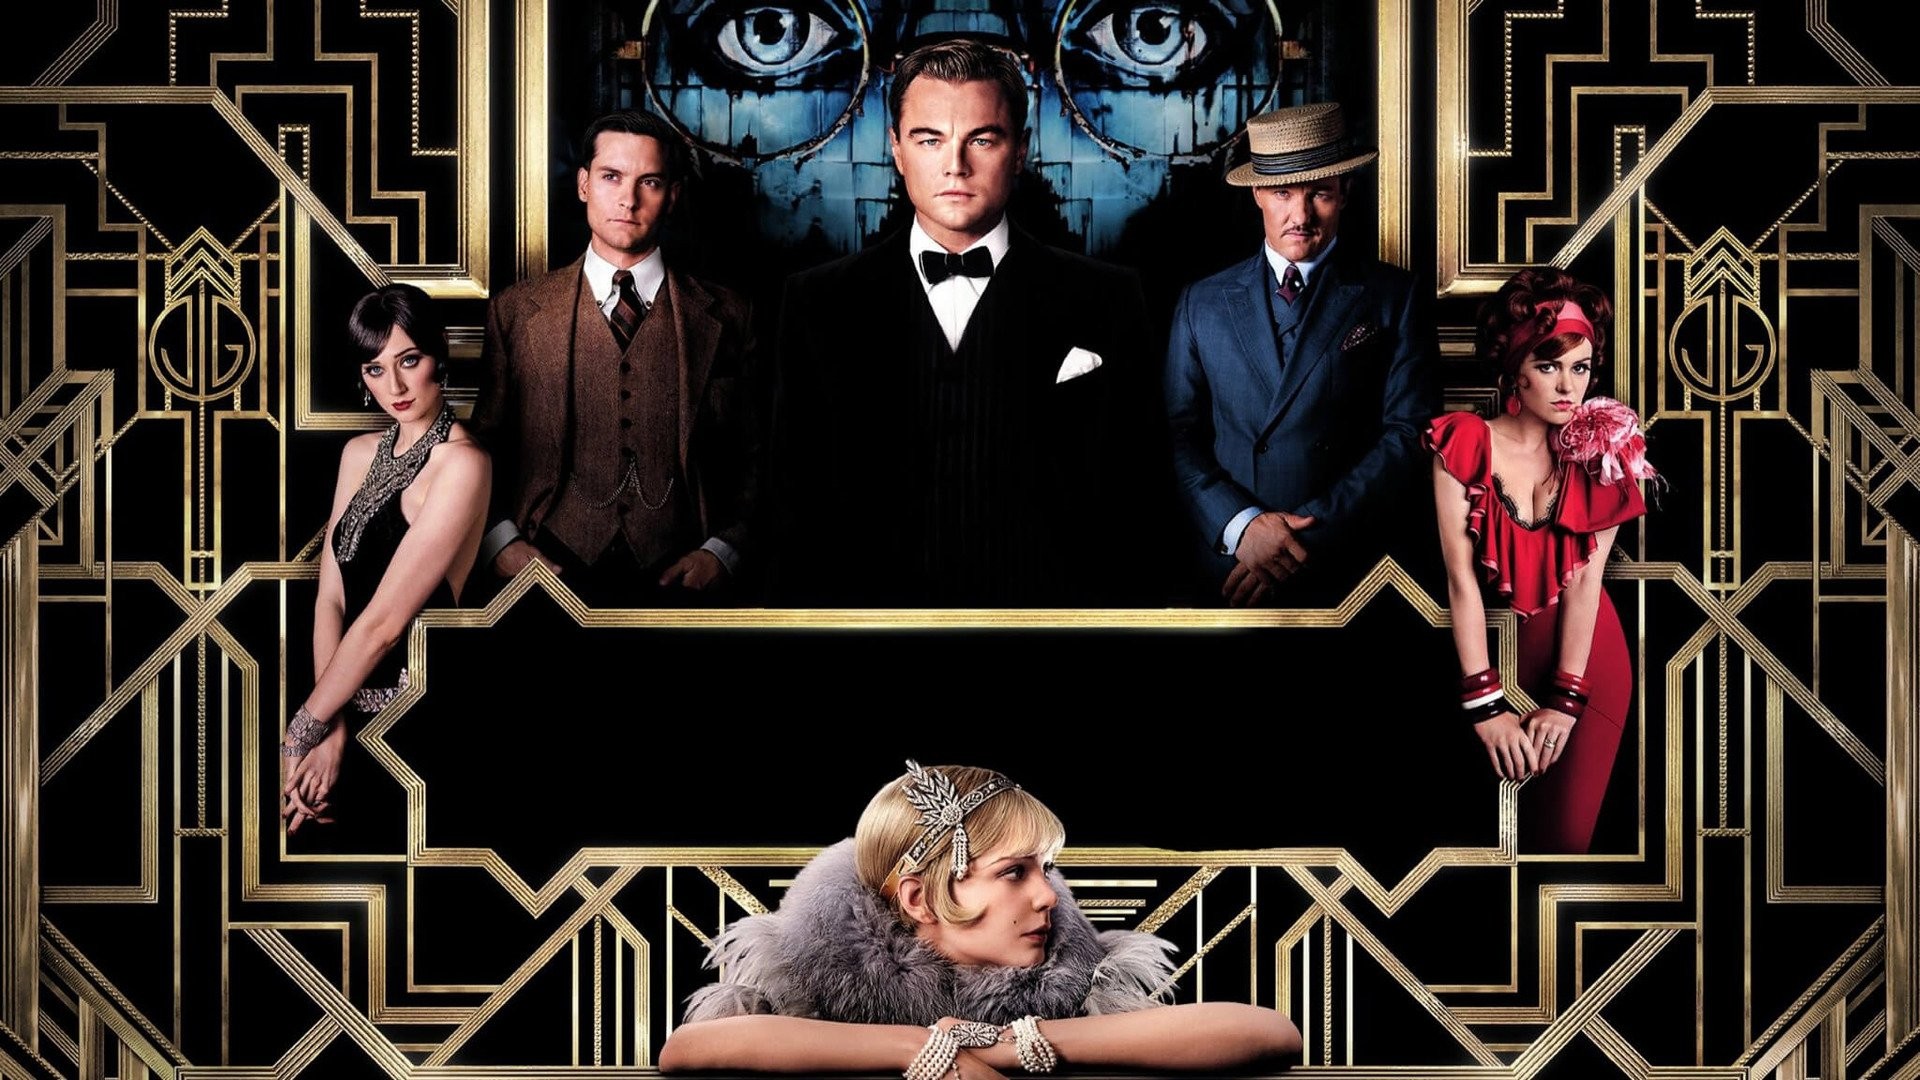 The Great Gatsby I Summary, Characters, Reception, & Analysis